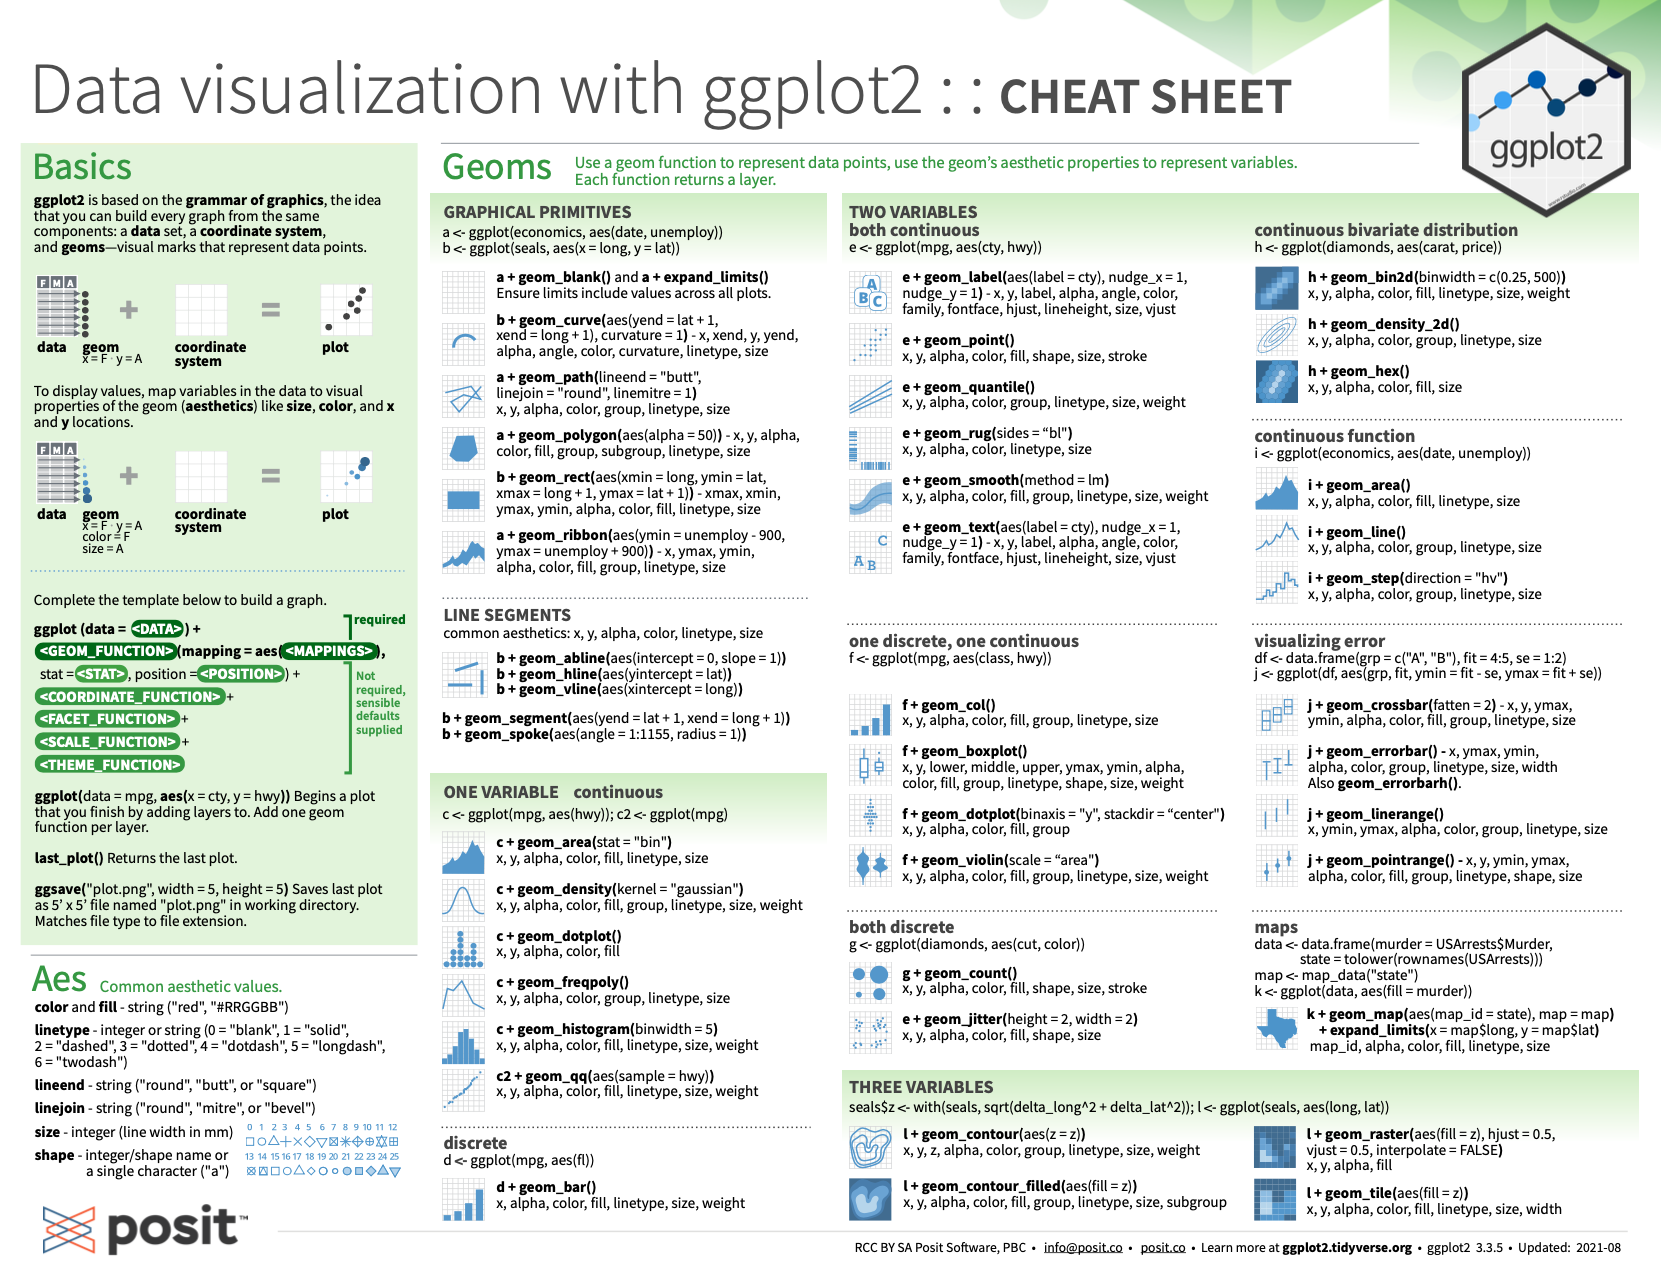 Data visualization with ggplot2 from Posit cheatsheets.